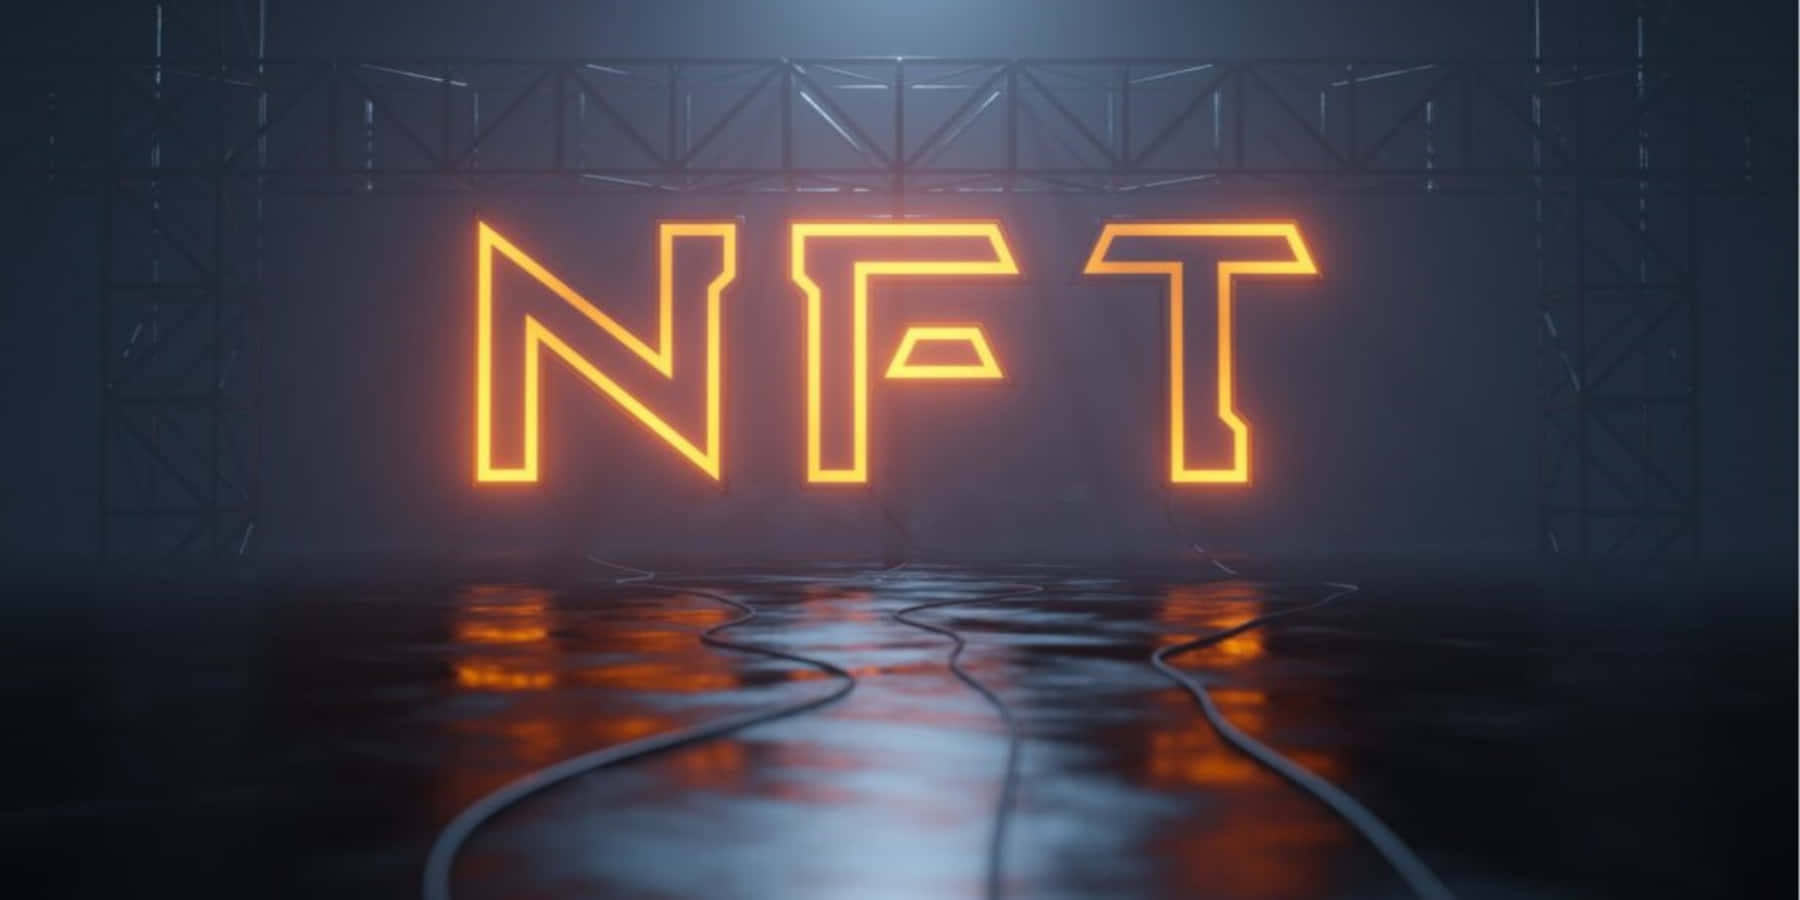 Nft Logo In Neon Lights In A Dark Room